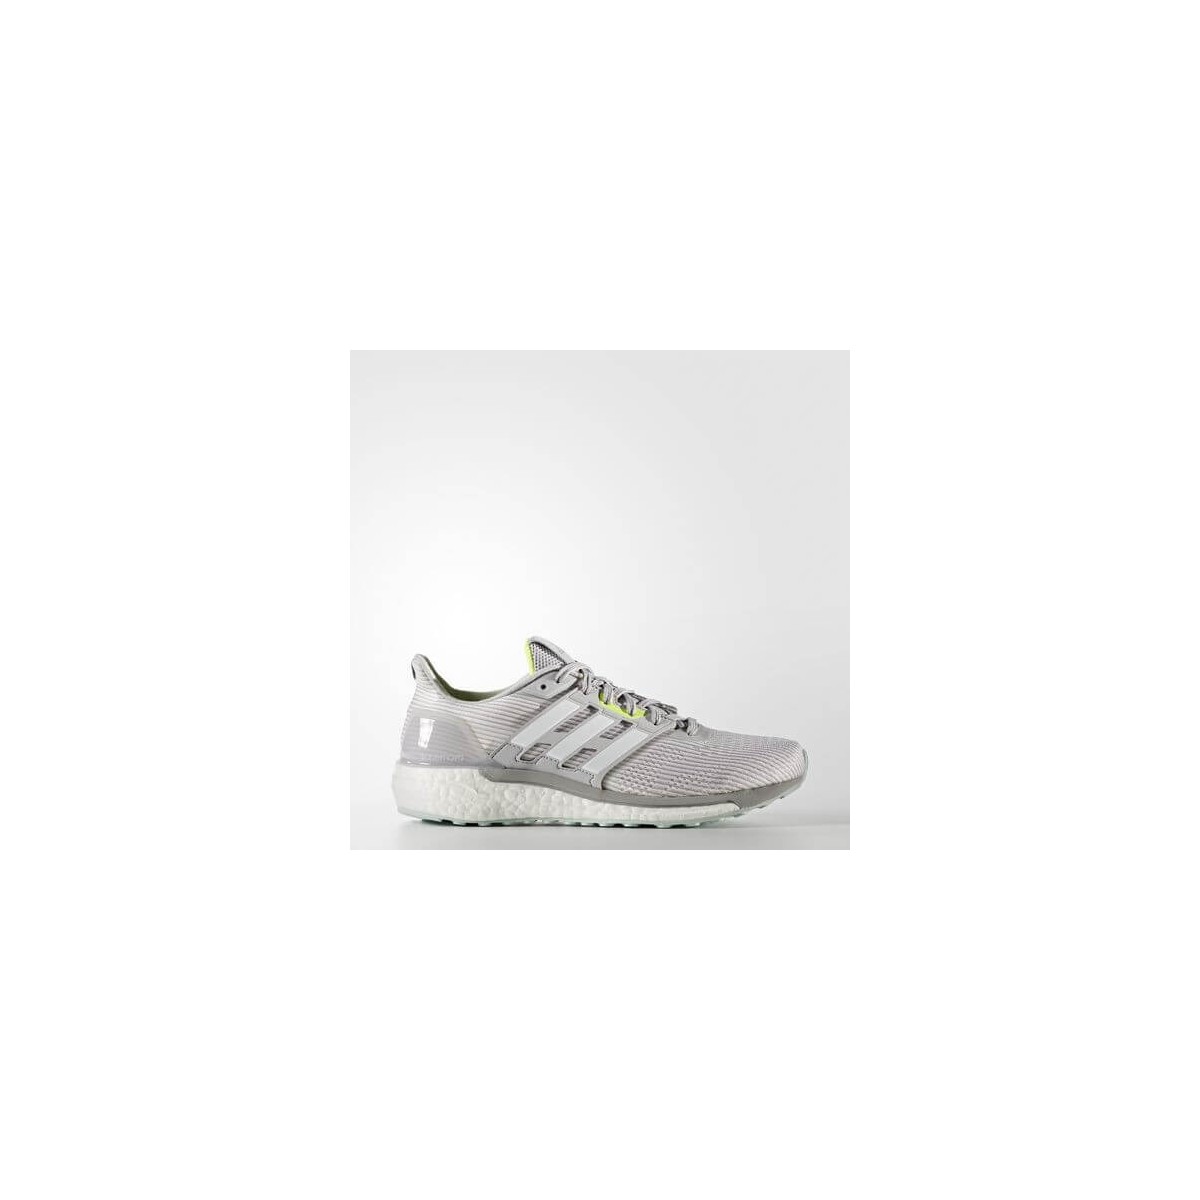 Adidas shoes gray / White SS17